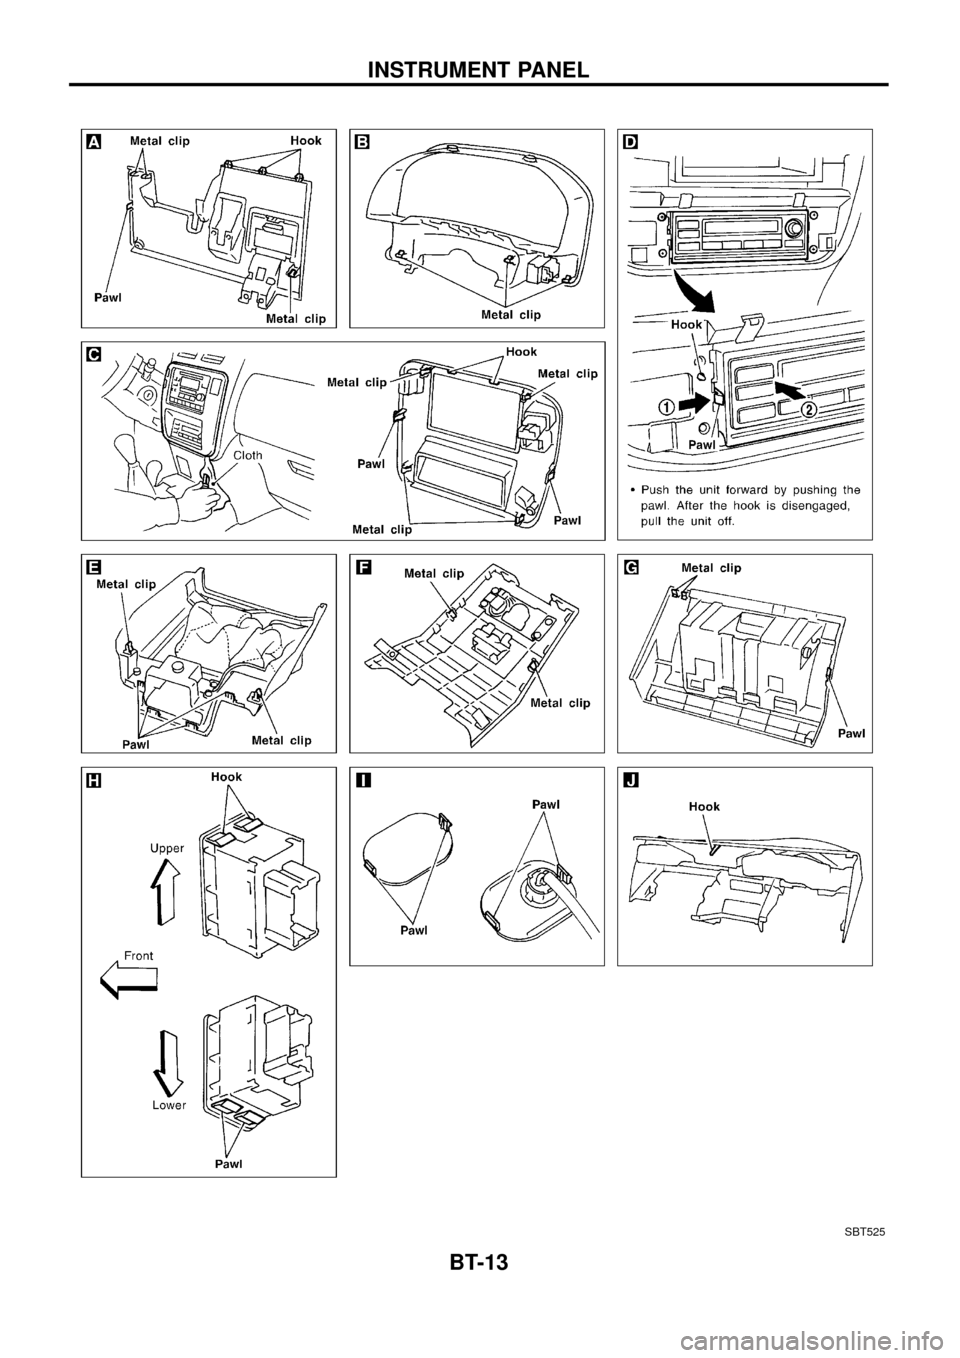 NISSAN PATROL 1998 Y61 / 5.G Body Workshop Manual SBT525
INSTRUMENT PANEL
BT-13 